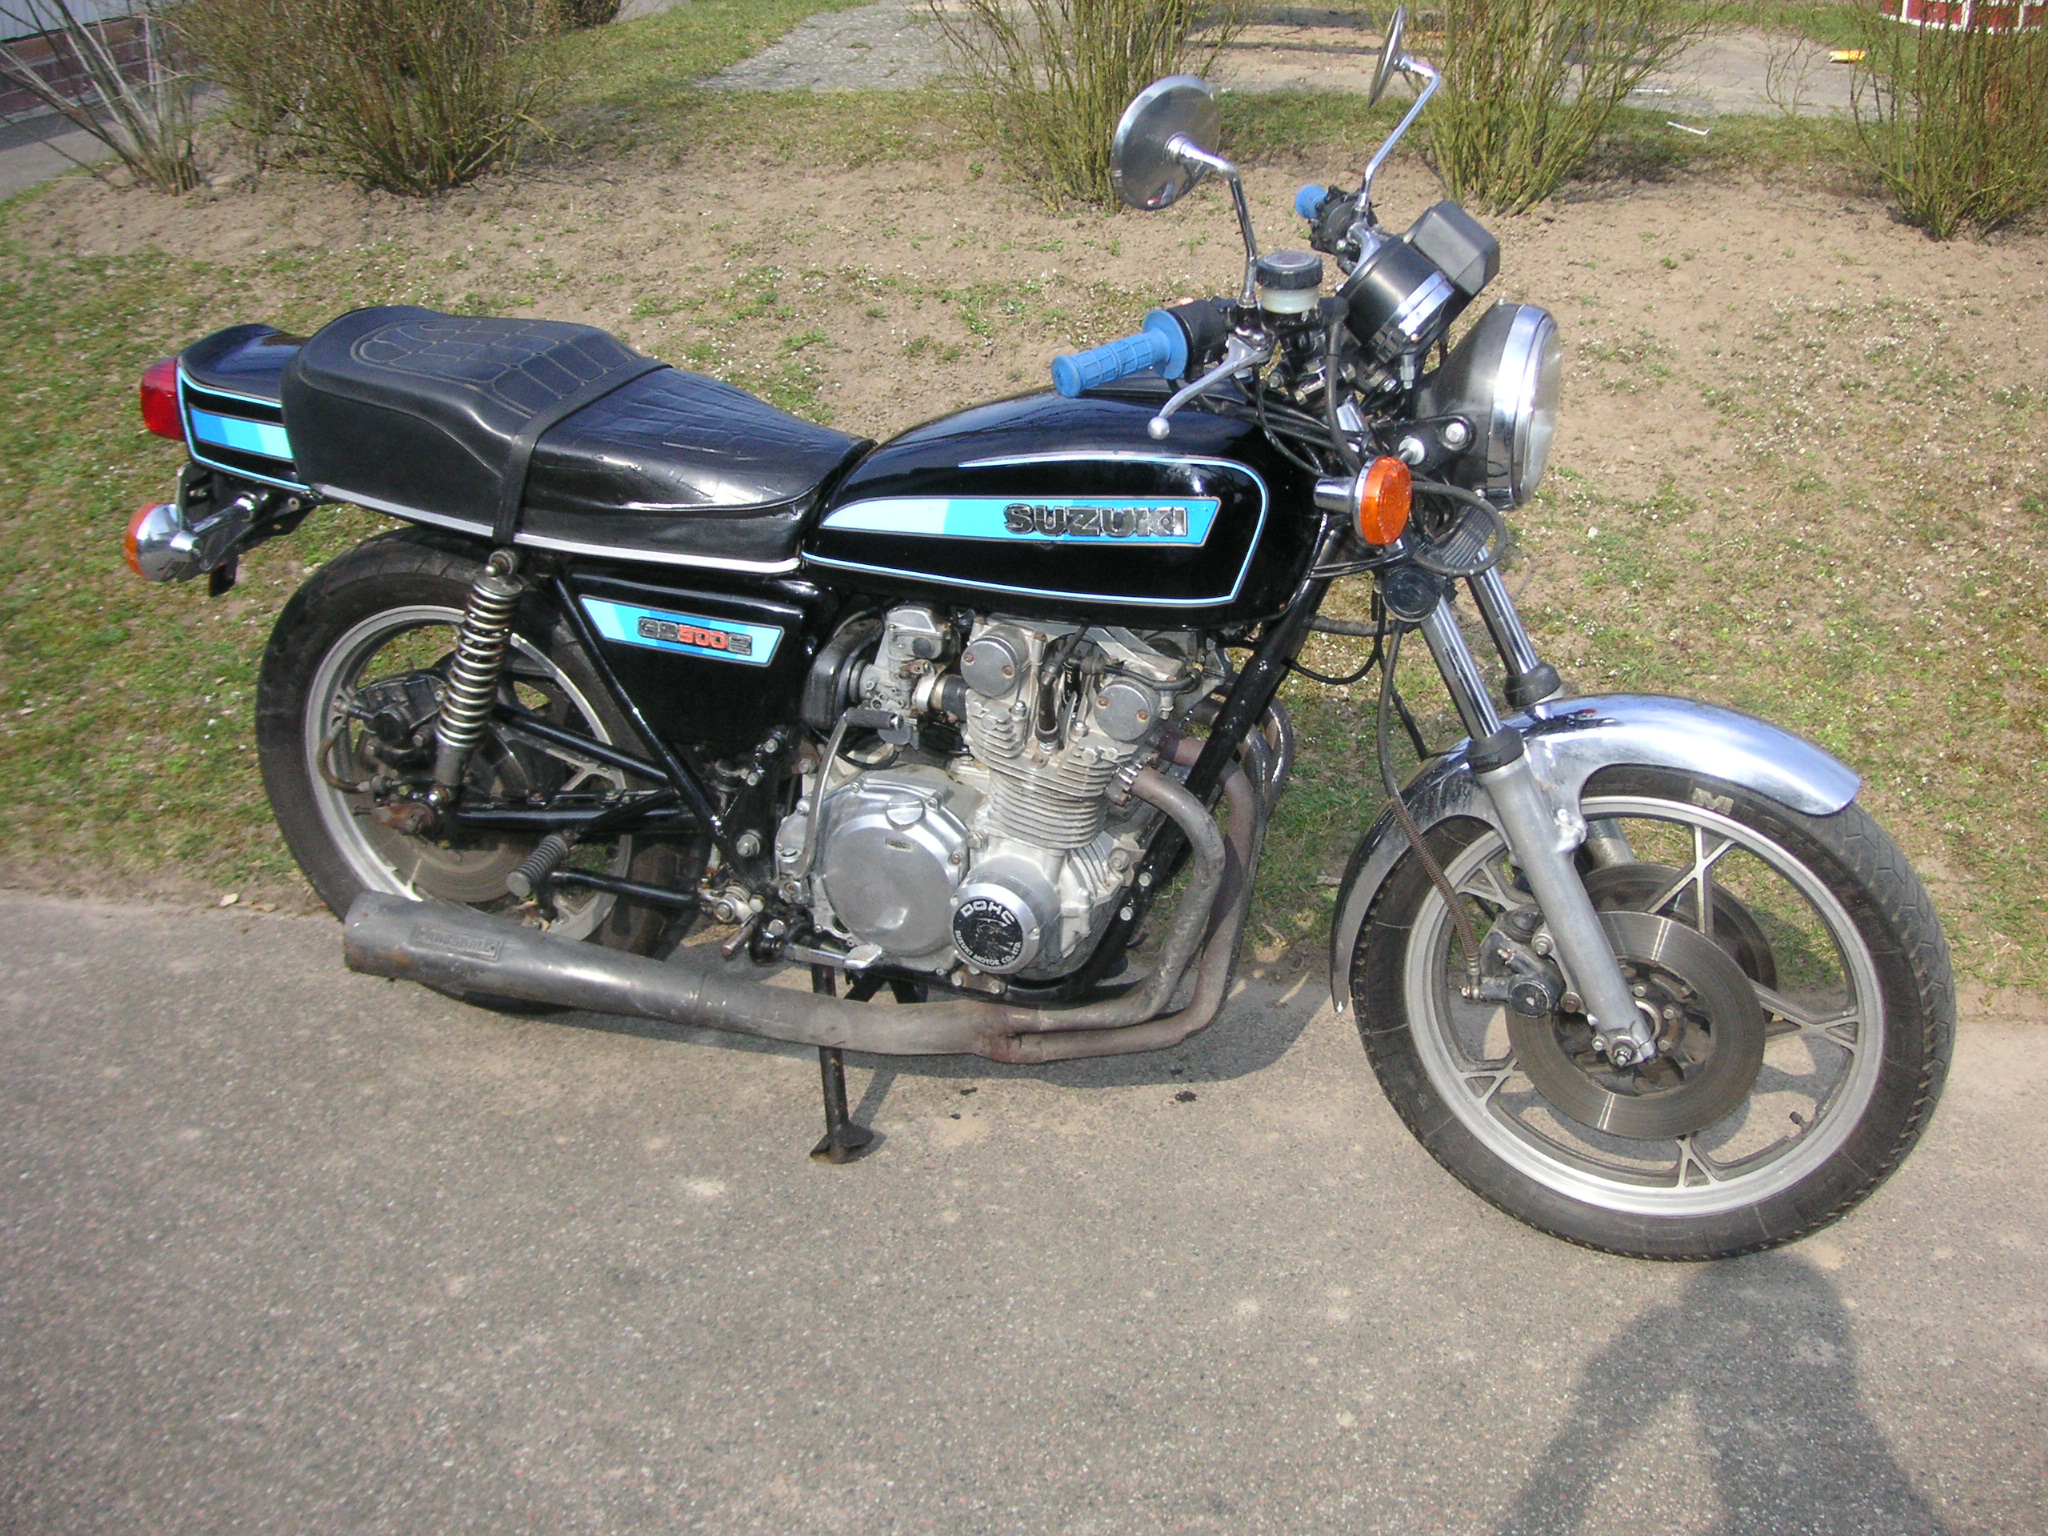 Brugt Suzuki GS 1000 1980 til salg - 123mc